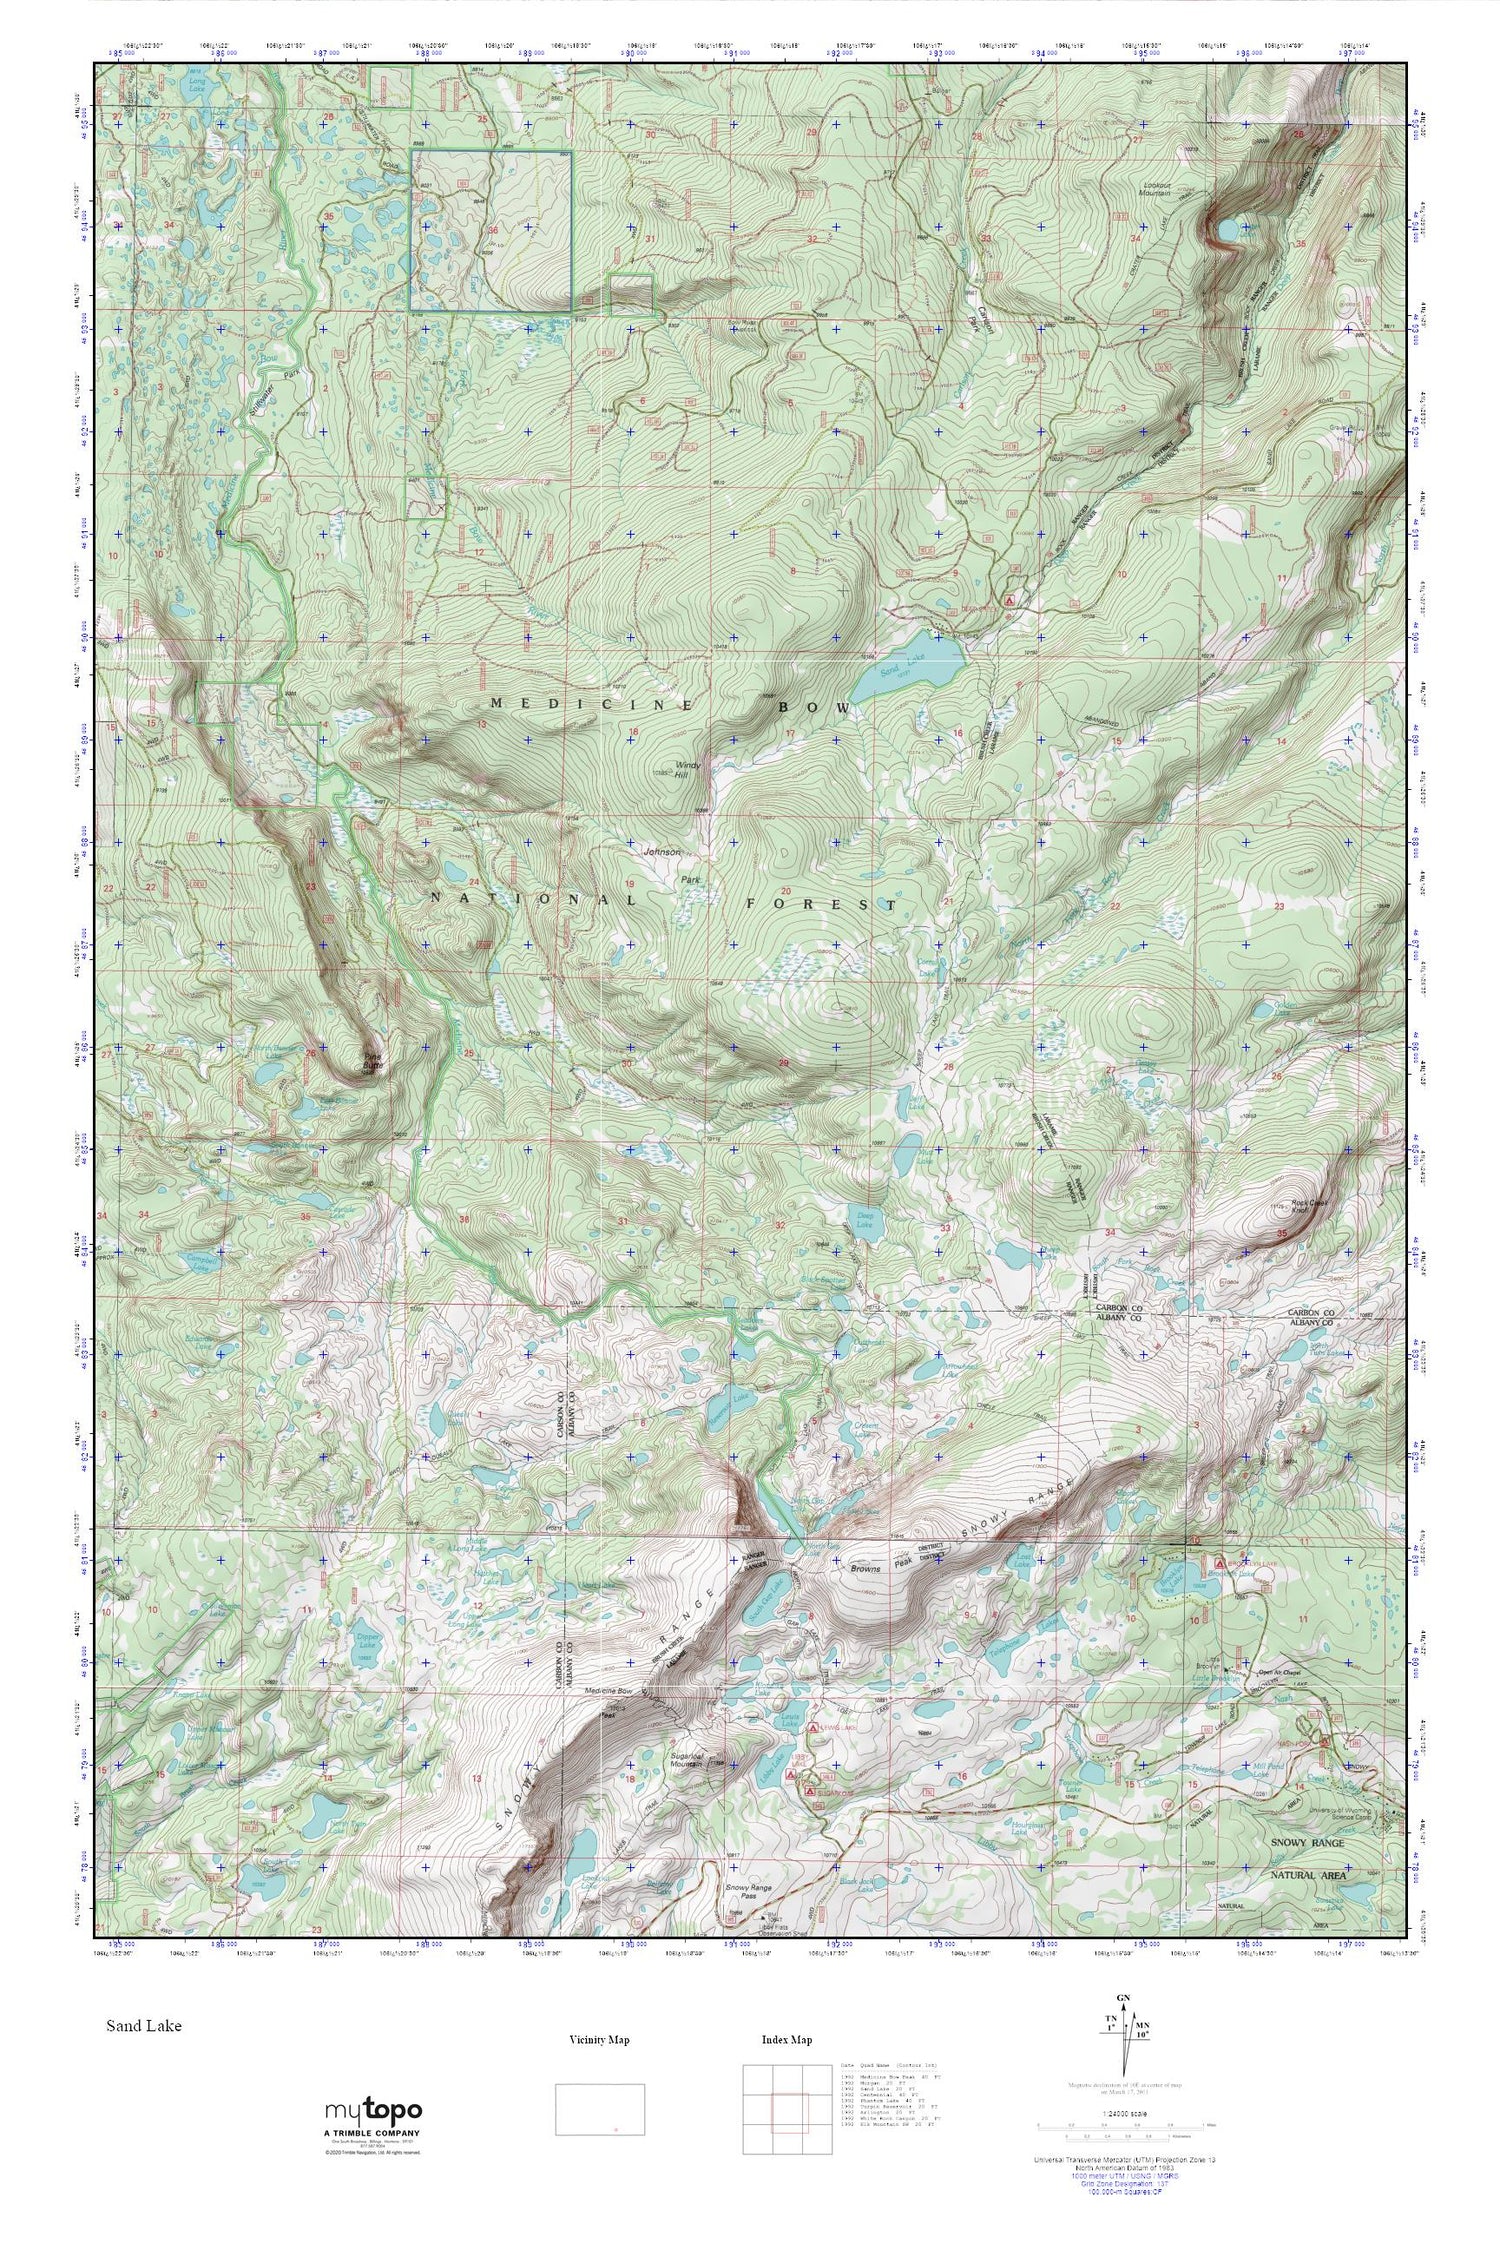 Sand Lake MyTopo Explorer Series Map Image